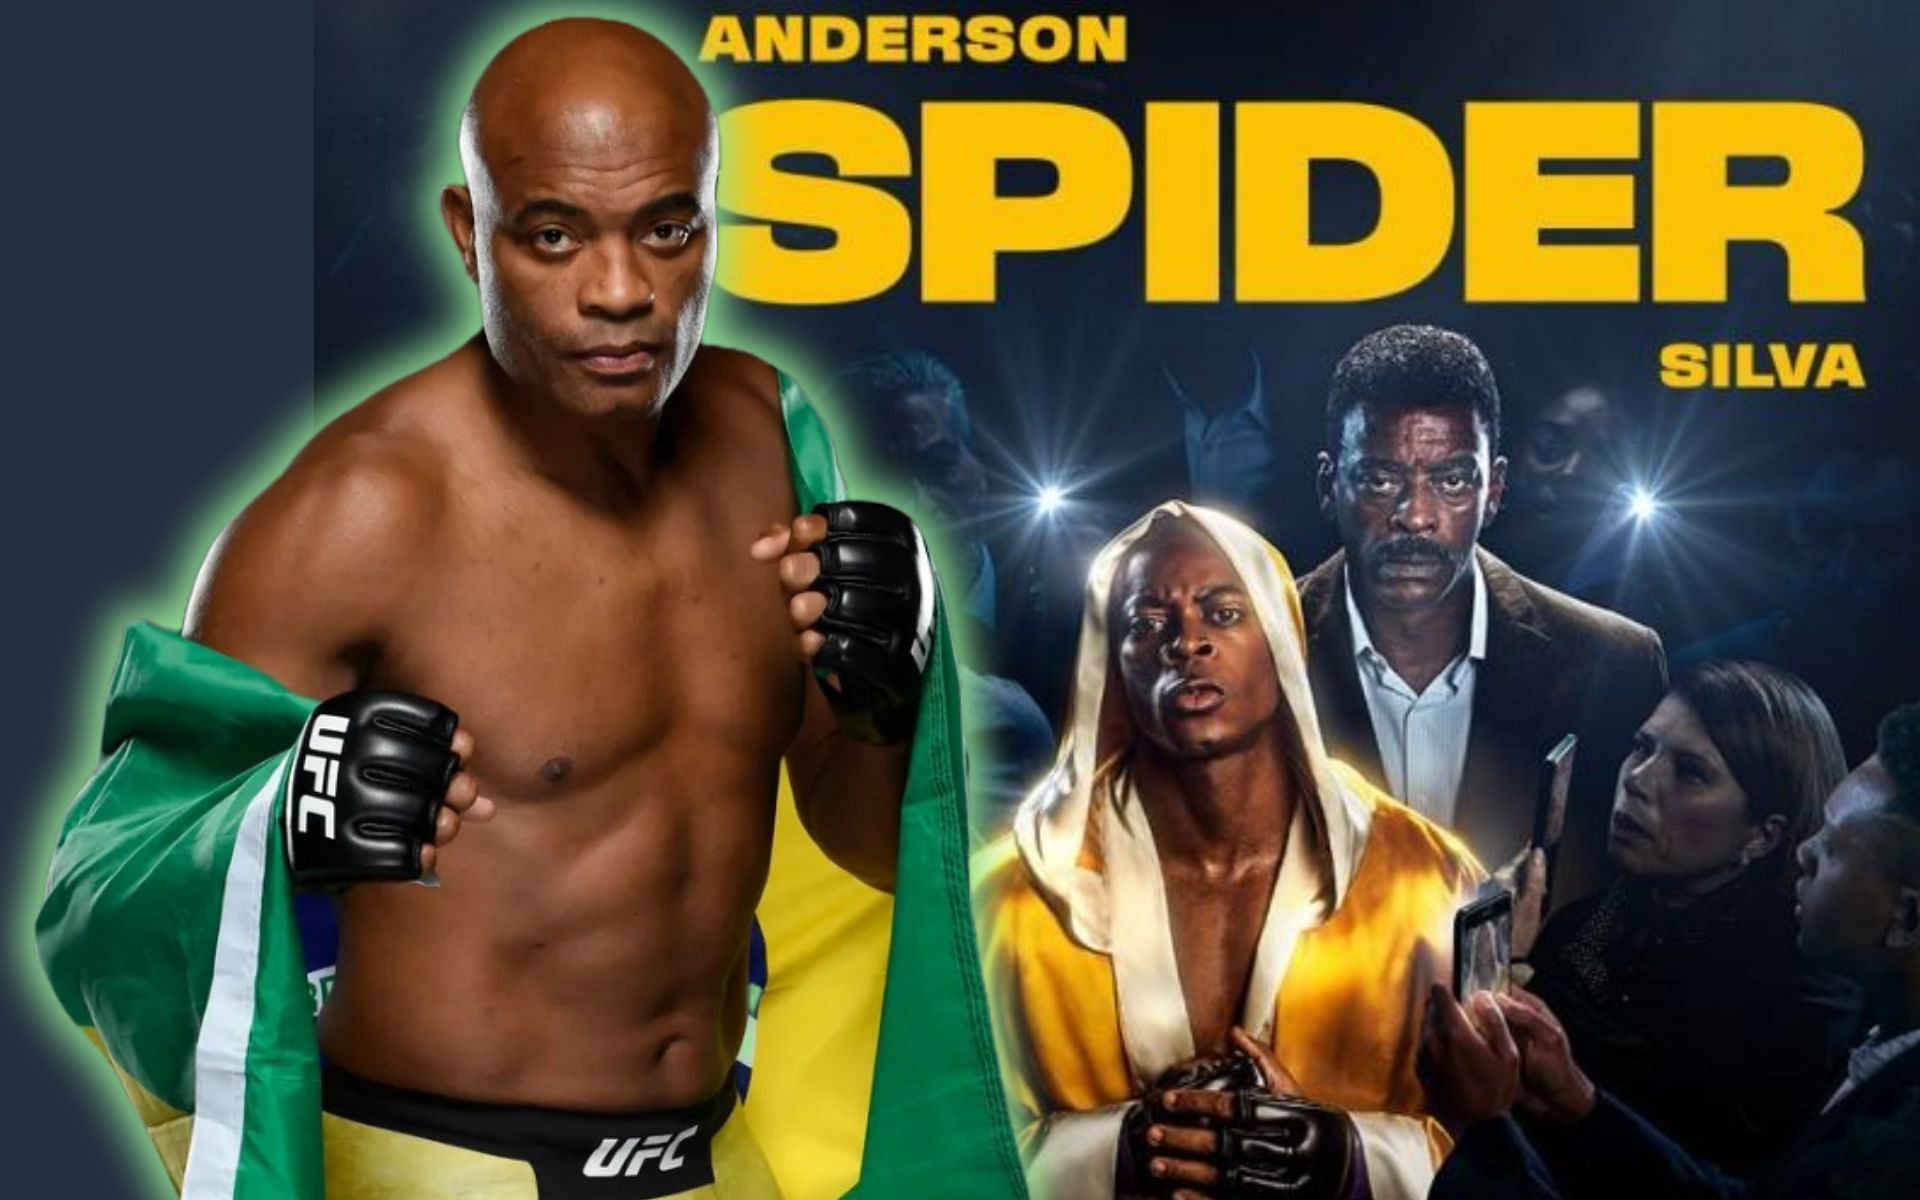 Teaser Oficial, Anderson Spider Silva